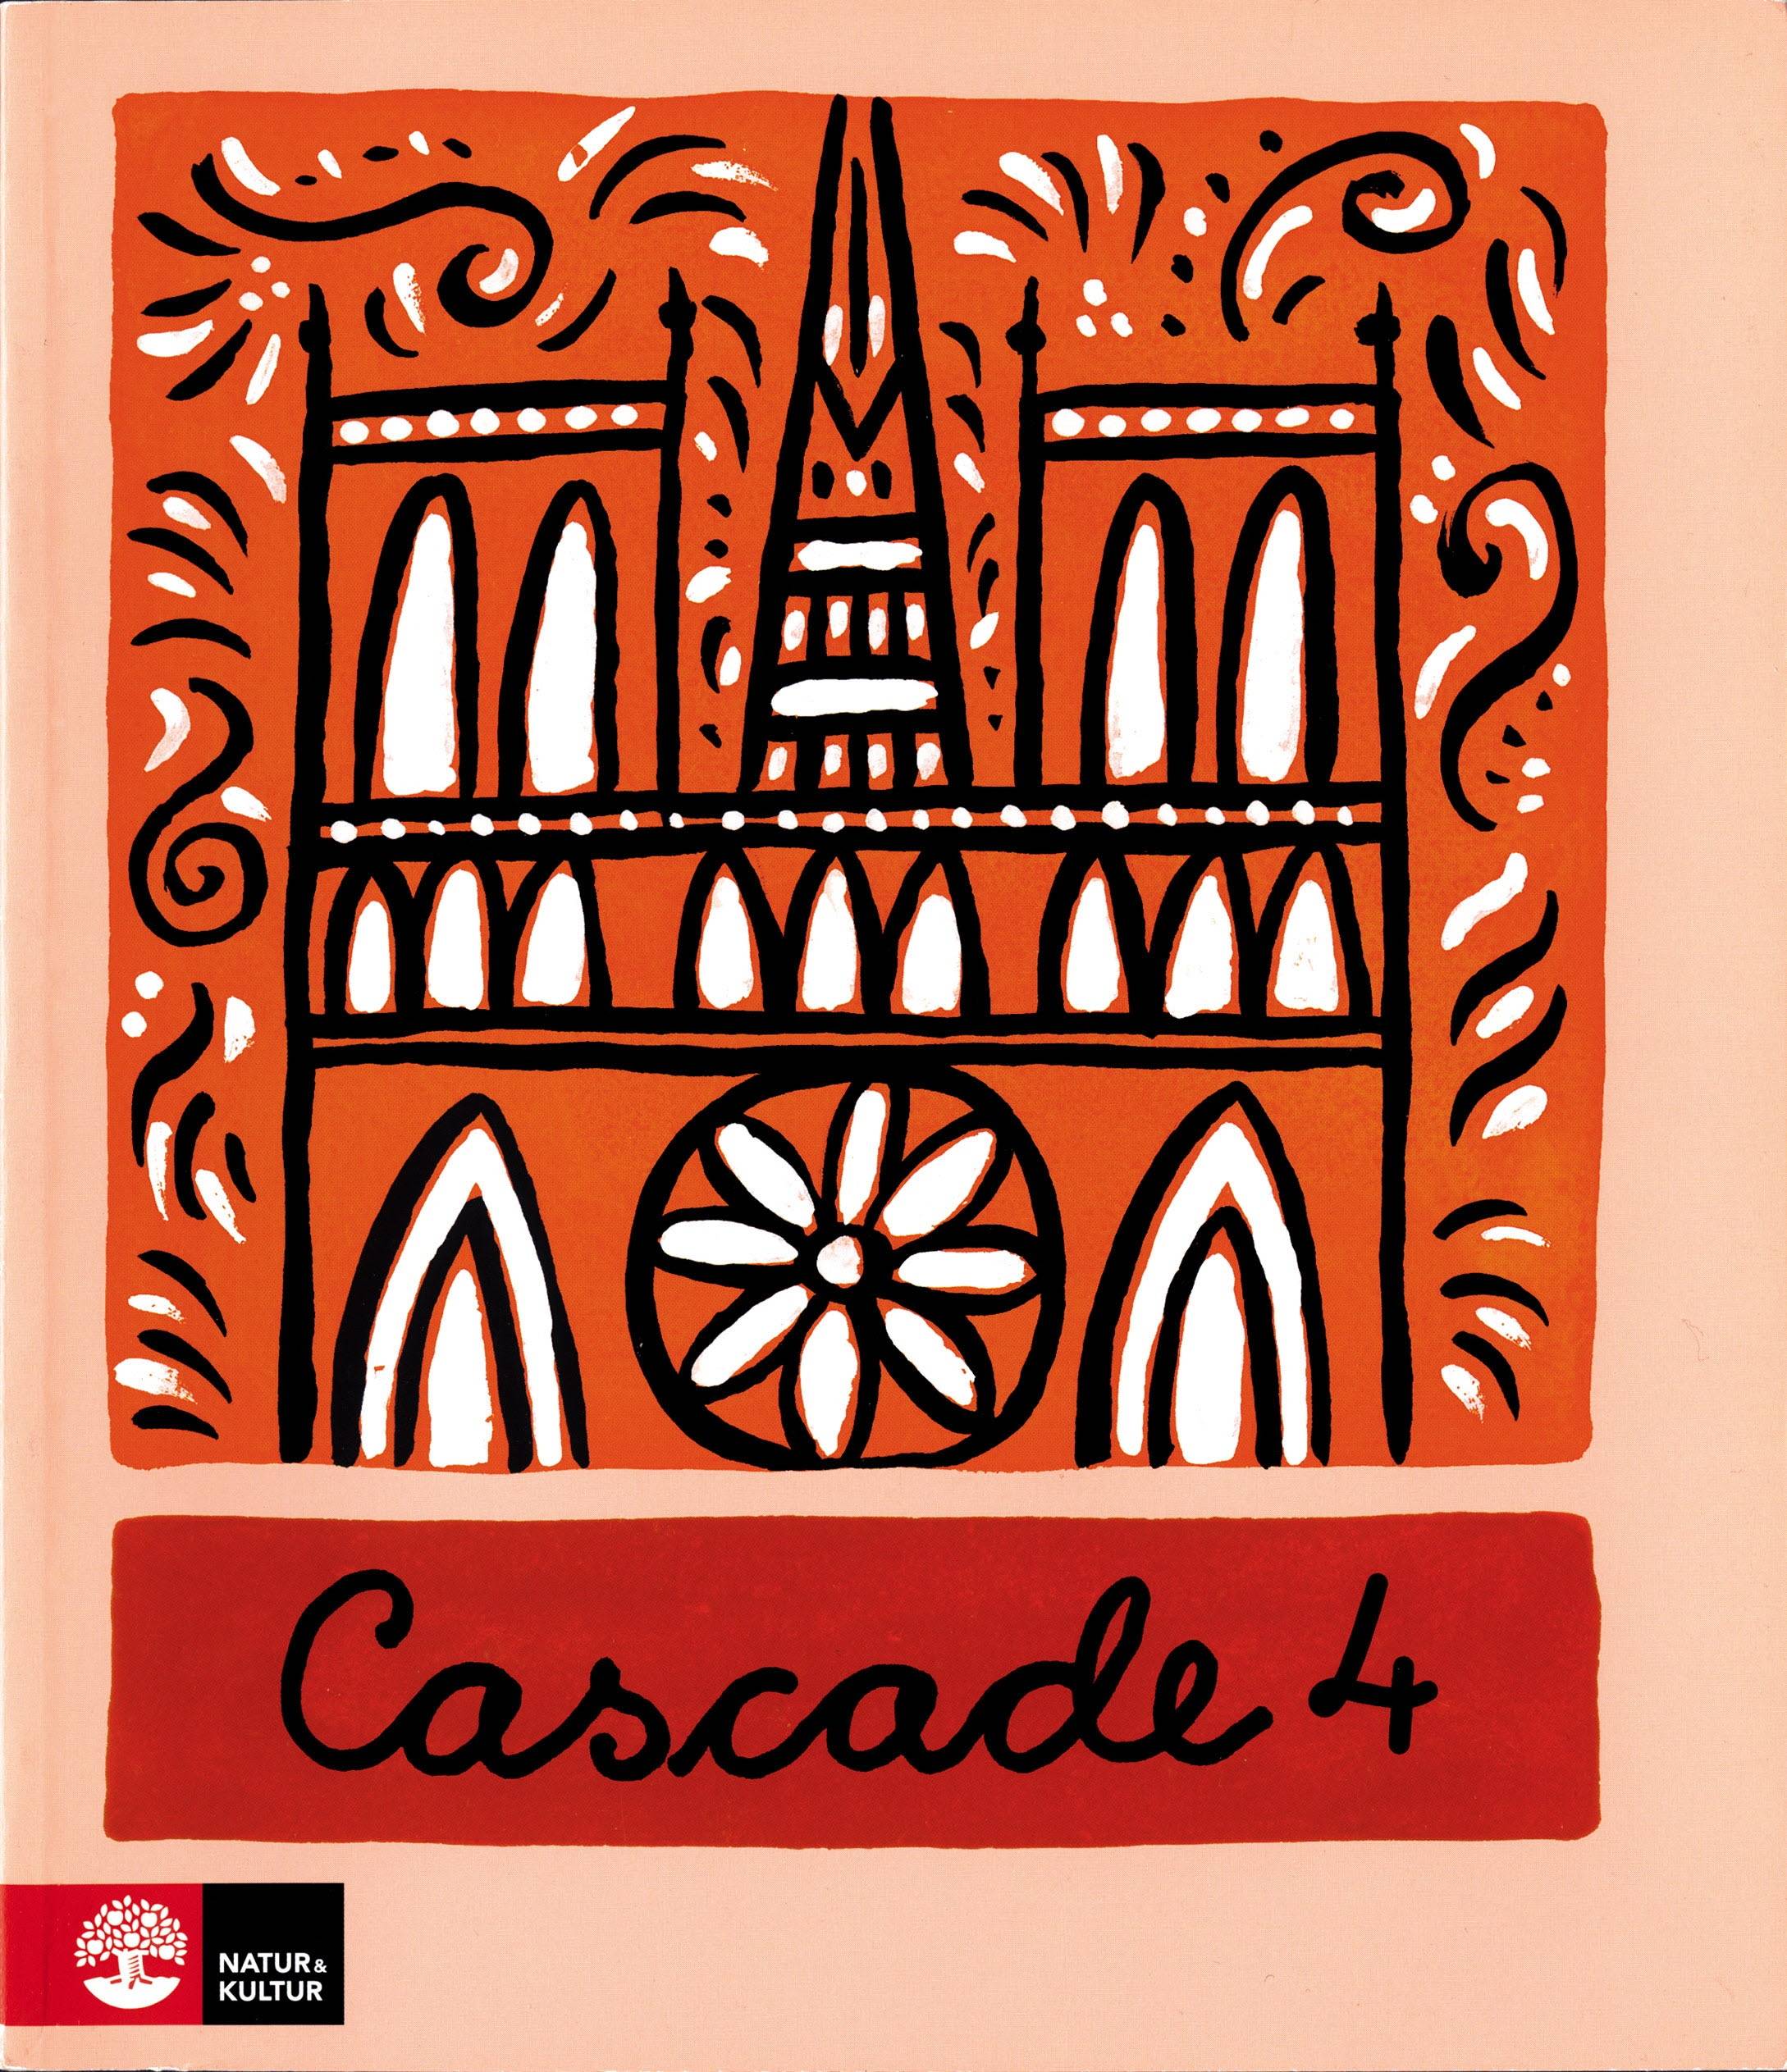 Cascade 4 Cahier åk 9 (5-pack)